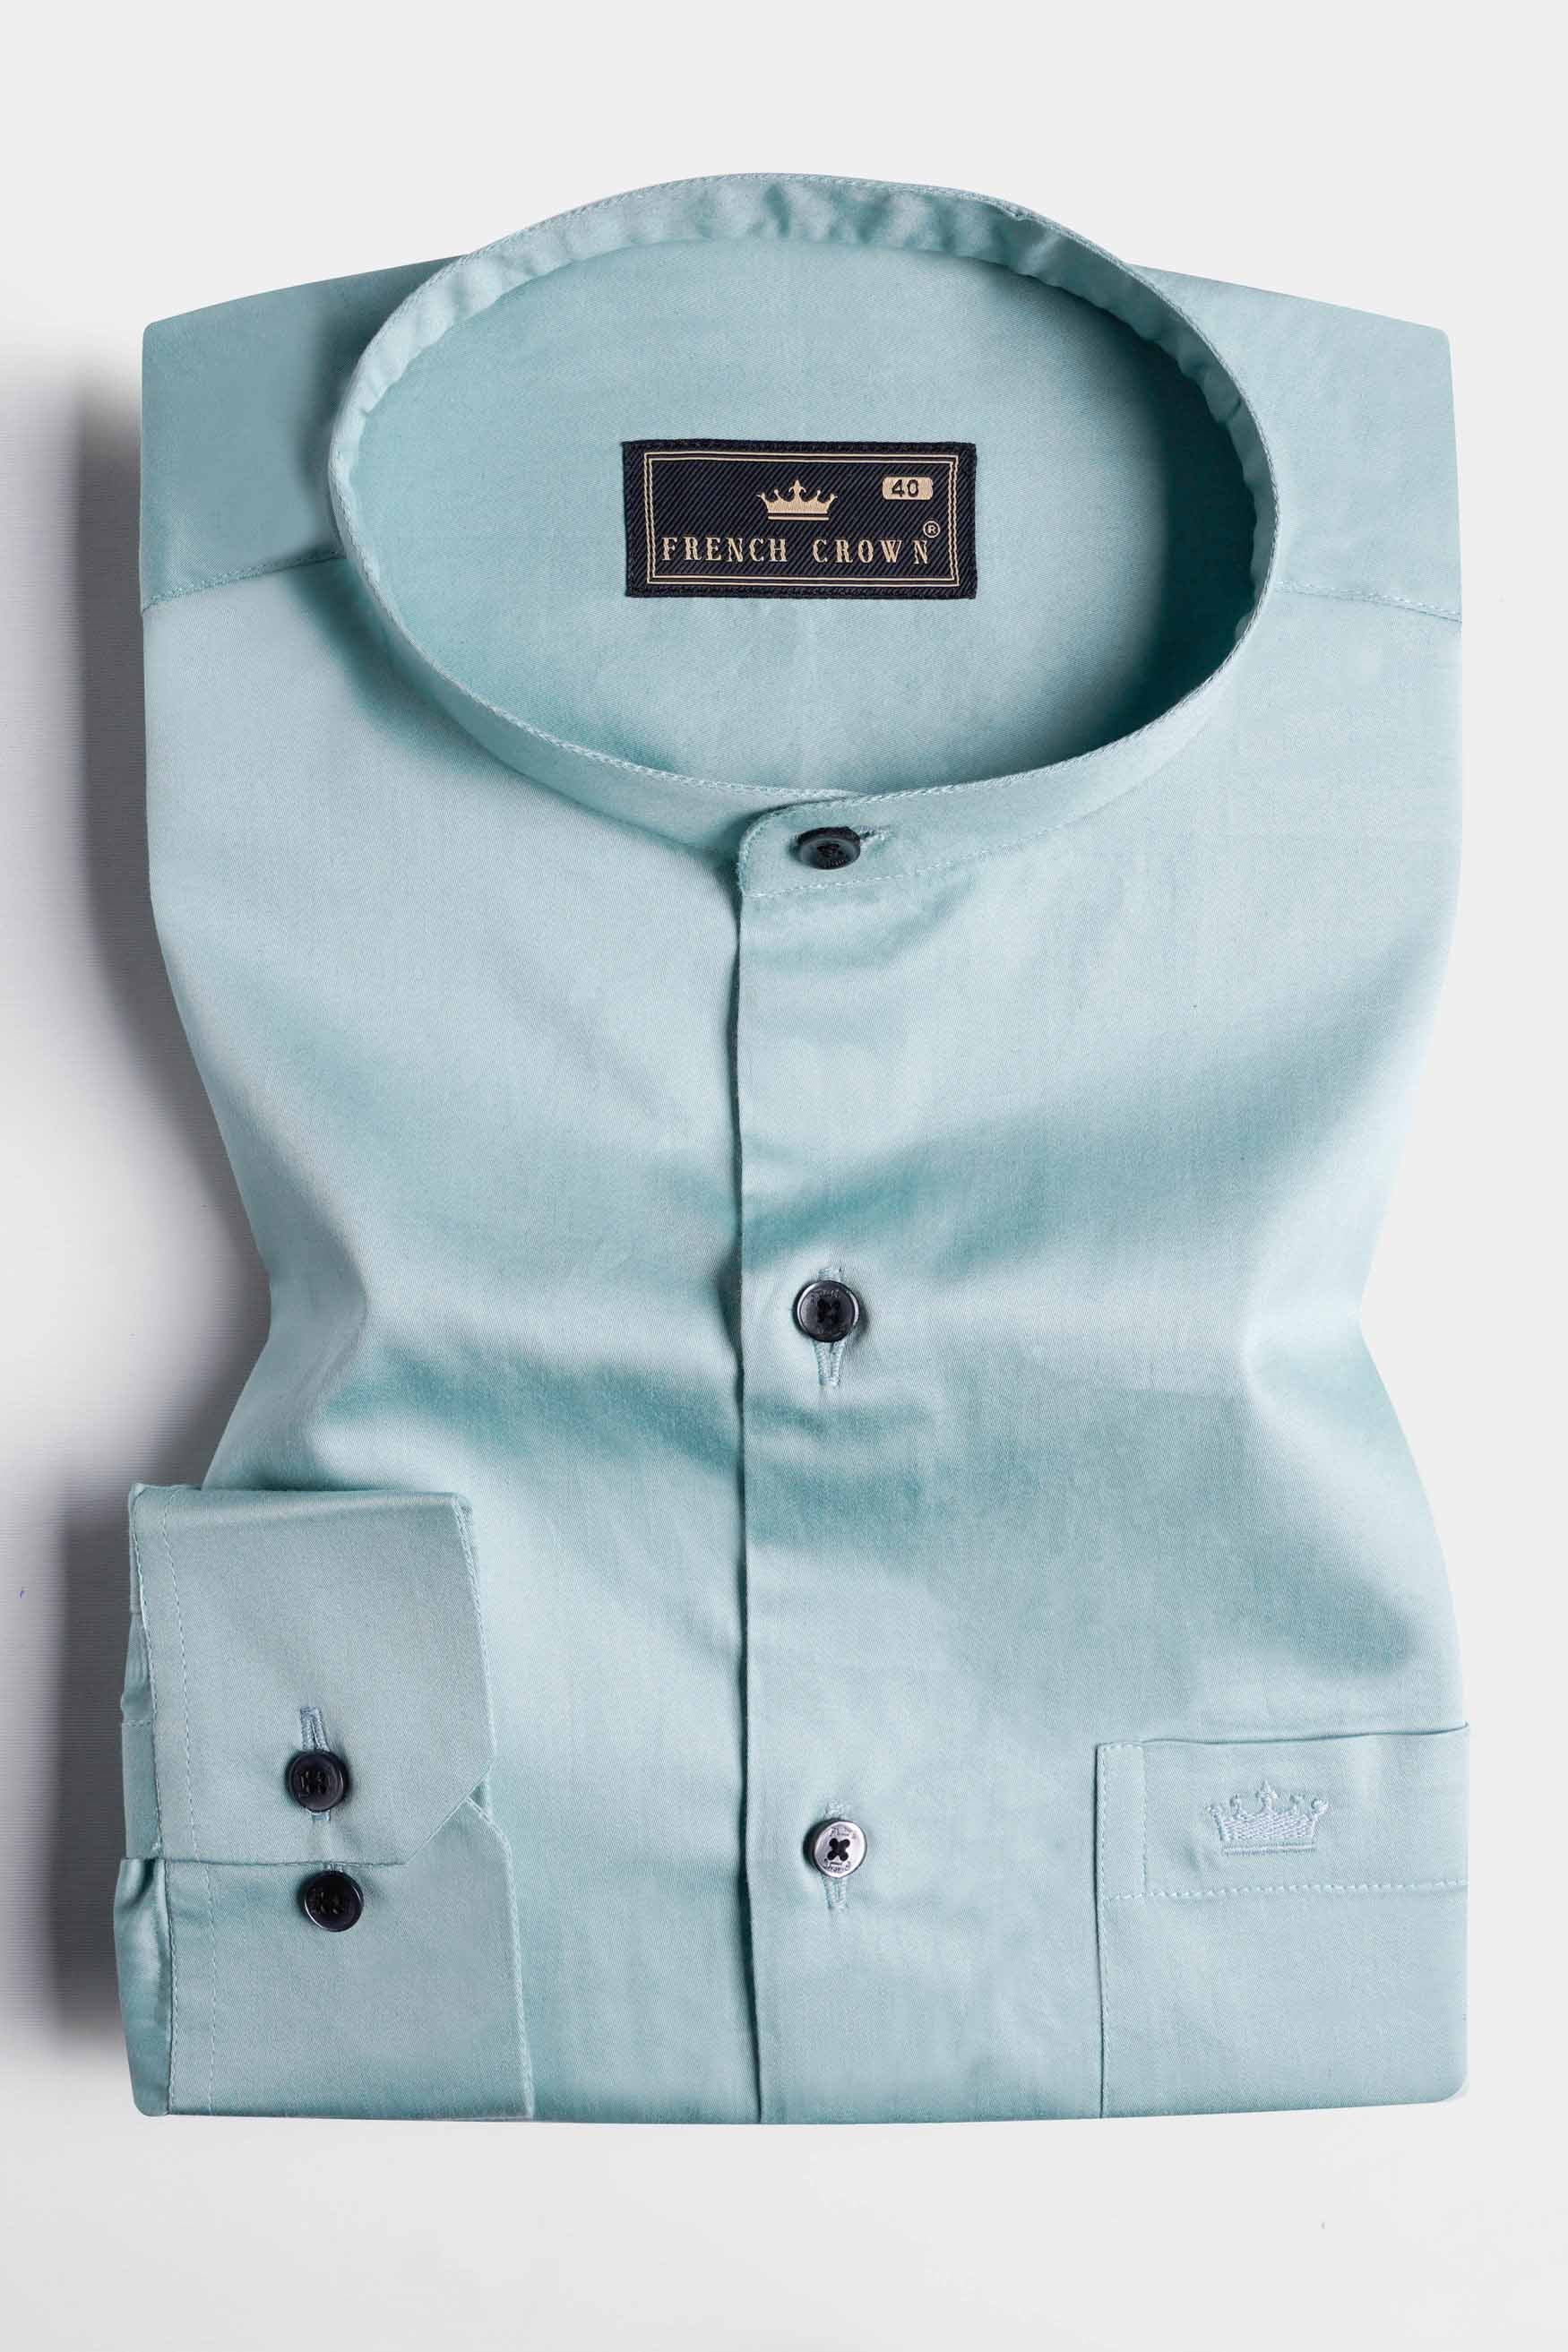 Neptune Blue Subtle Sheen Super Soft Premium Cotton Mandarin Shirt